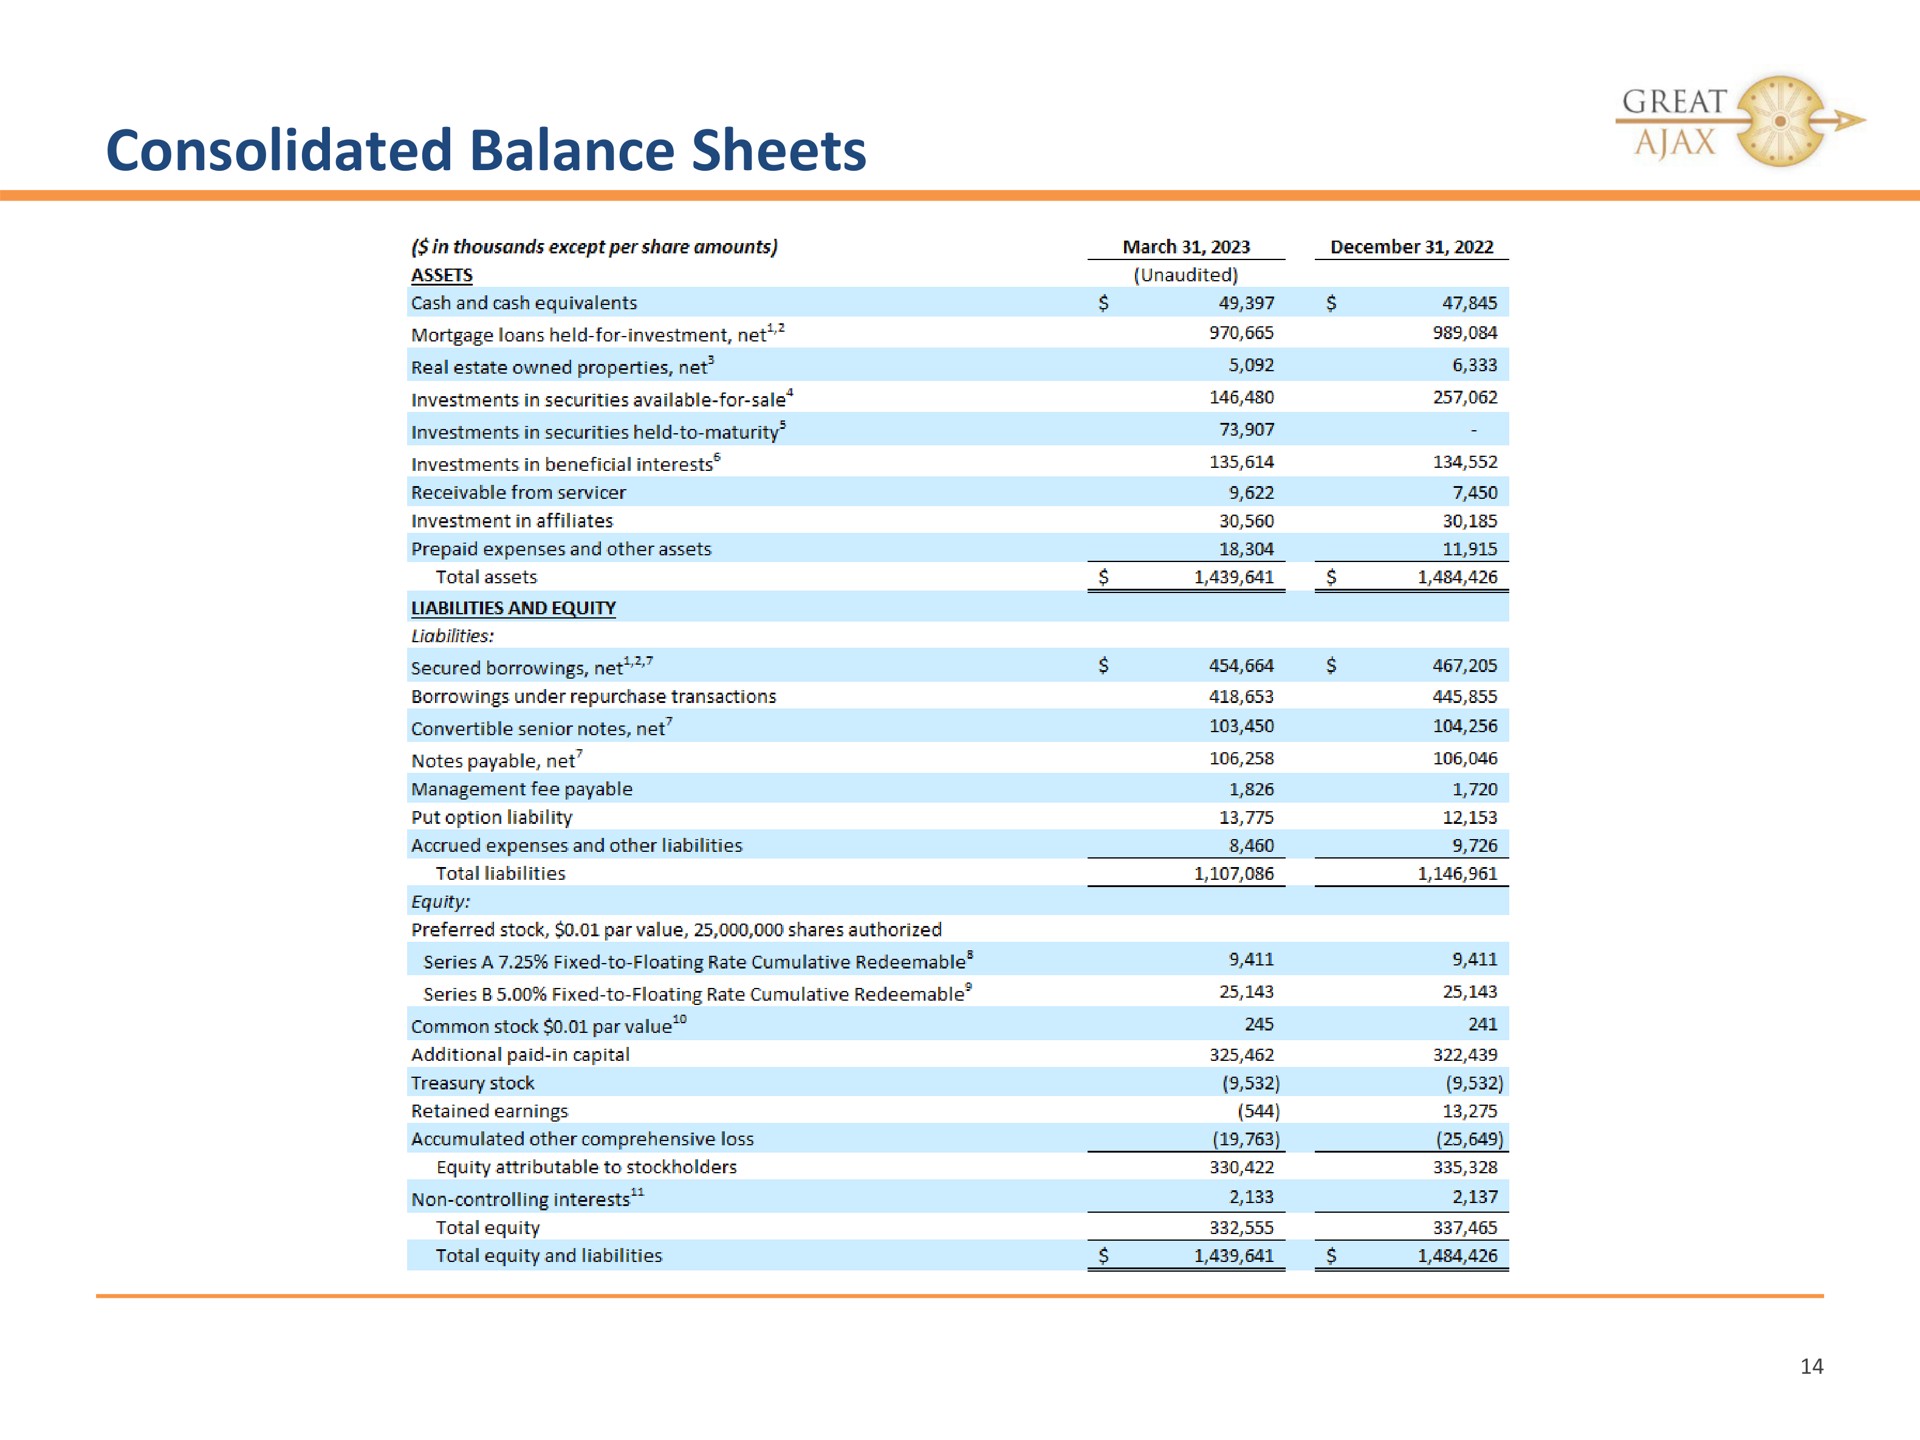 consolidated balance sheets | Great Ajax